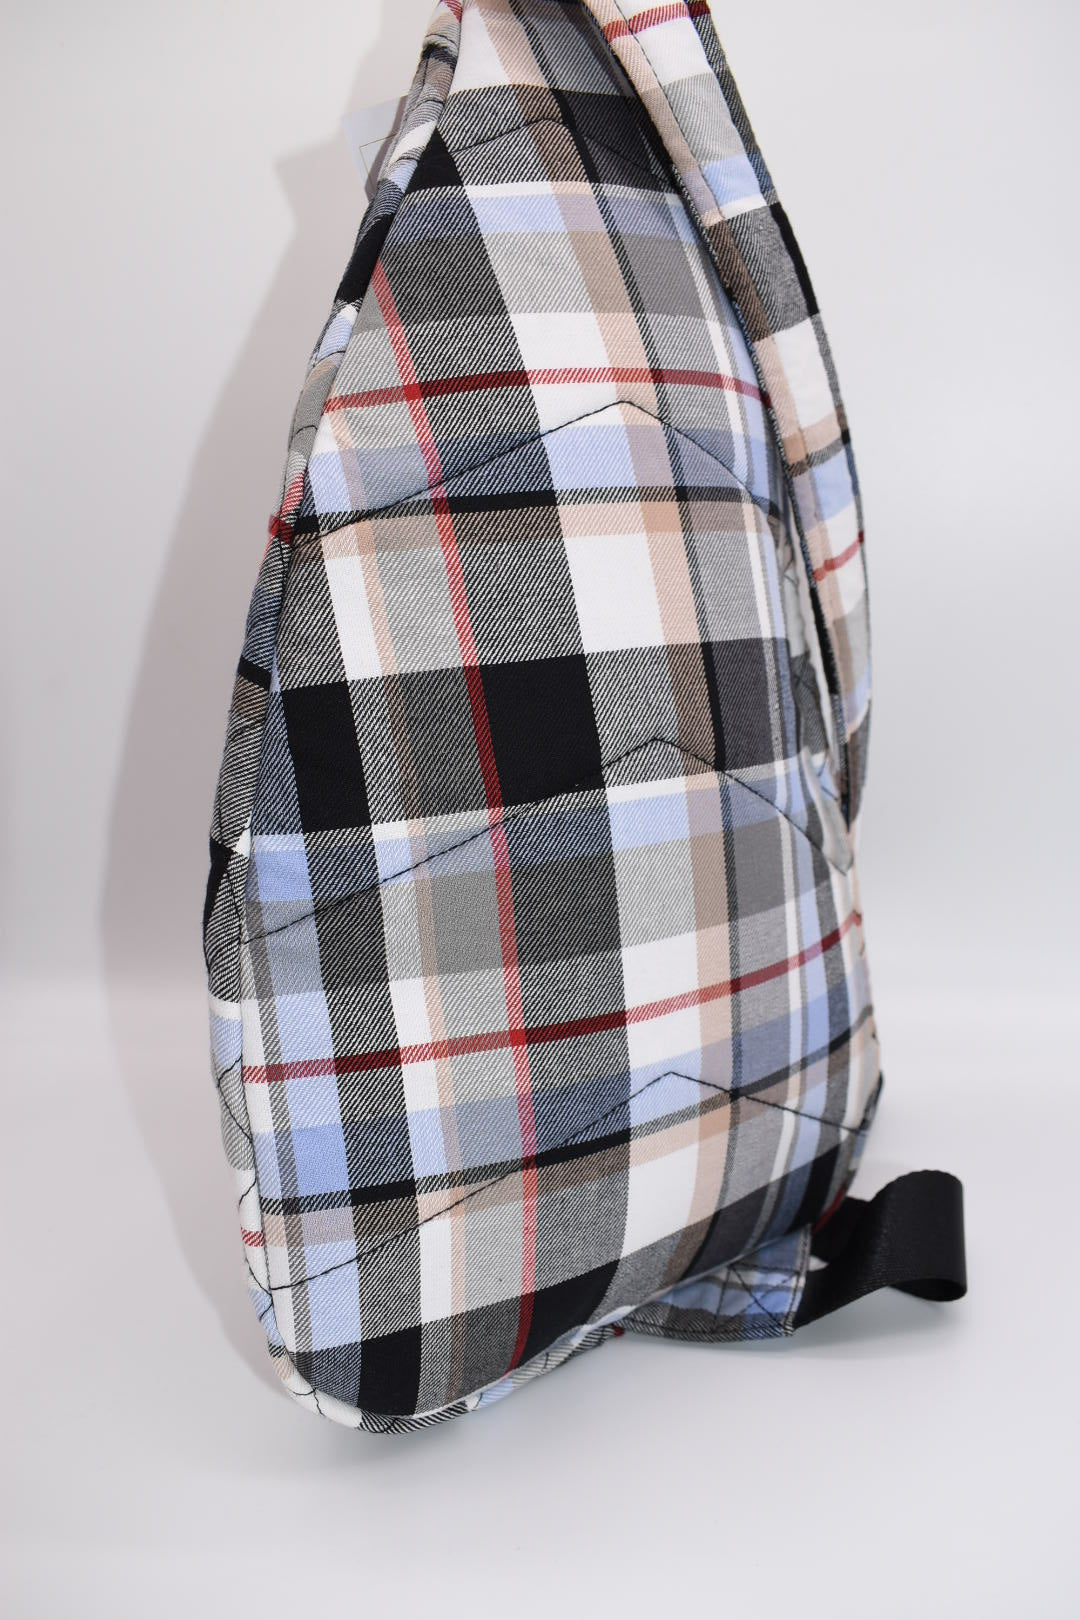 Vera Bradley Essential Sling Bag in "Perfectly Plaid" Pattern